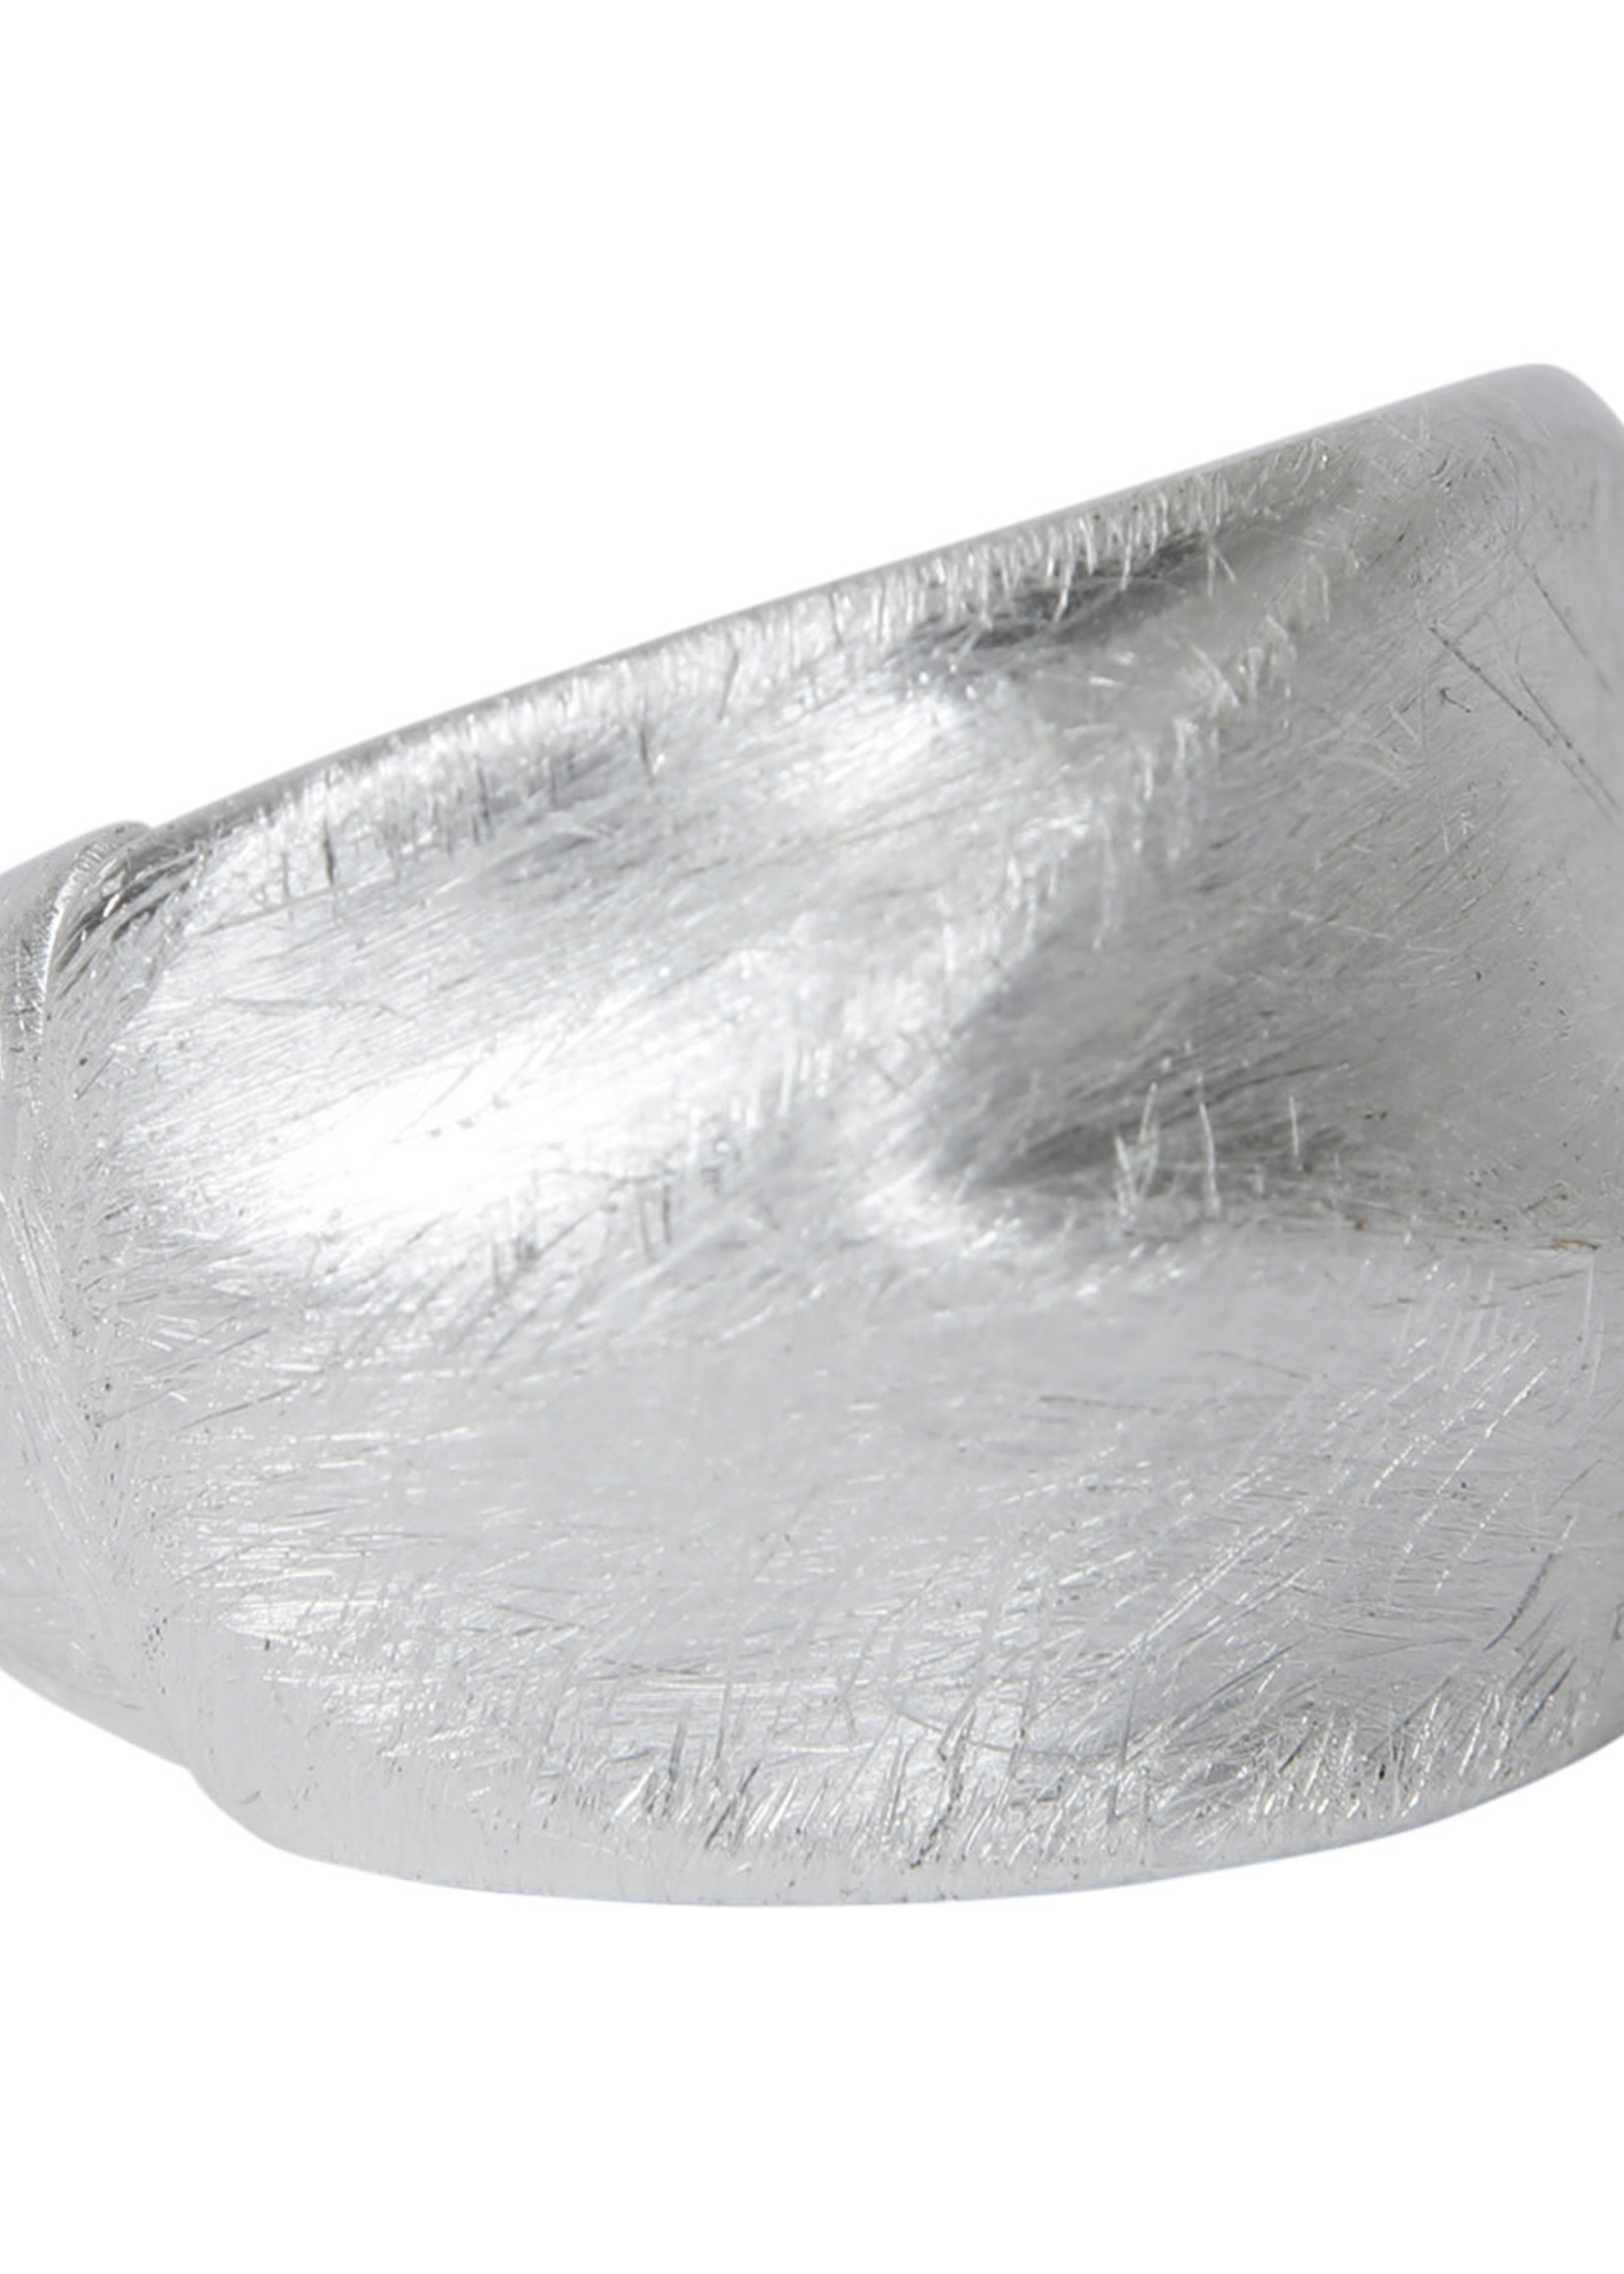 The Moshi Ring Blair, silver